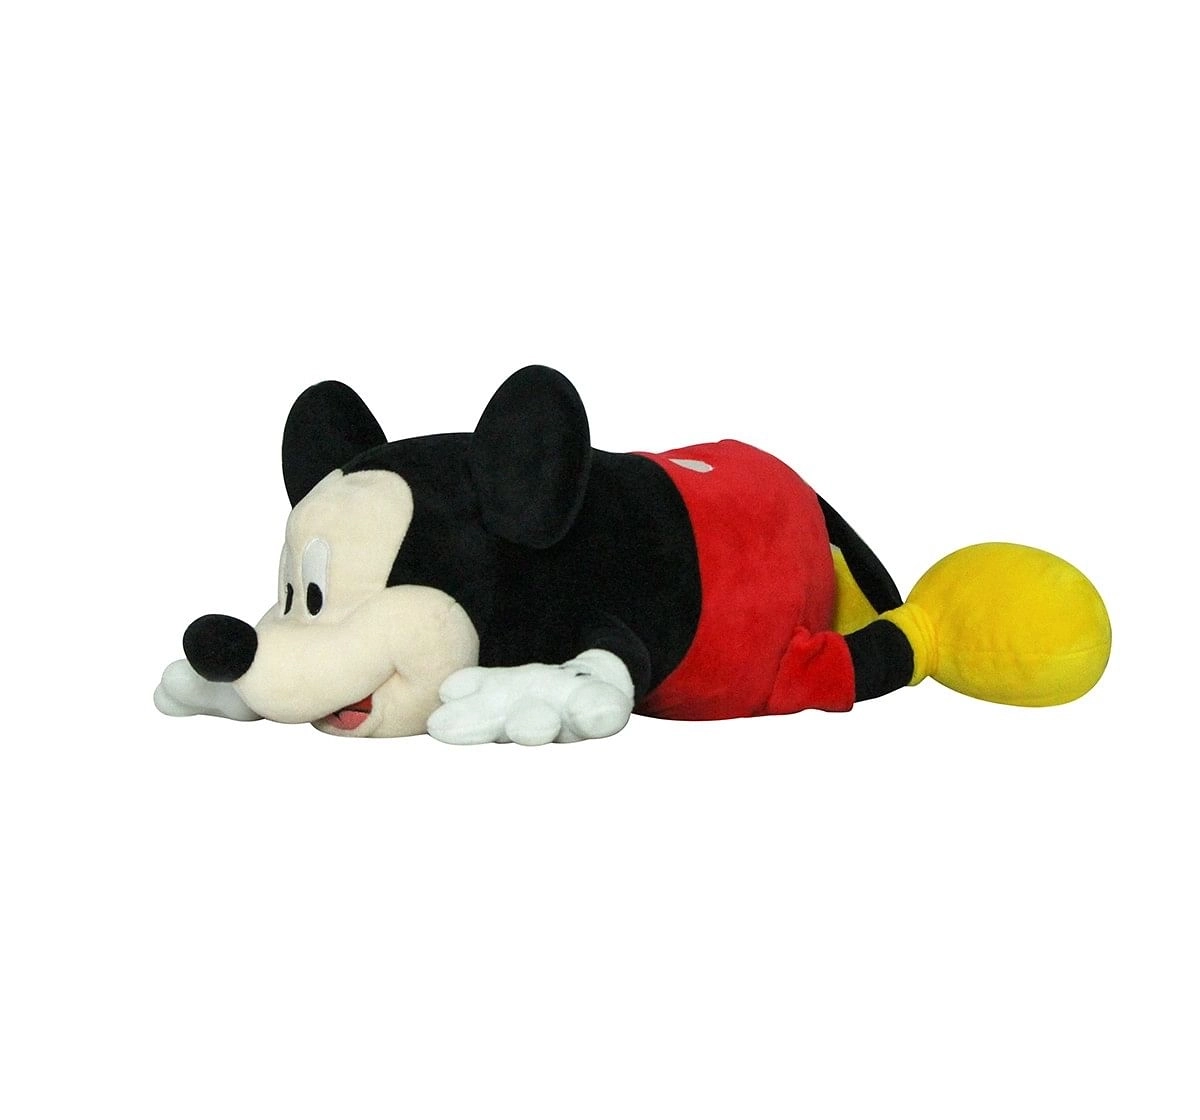 Disney Mickey Bolster Plush Accessories for Kids age 12M+ - 16.5 Cm 